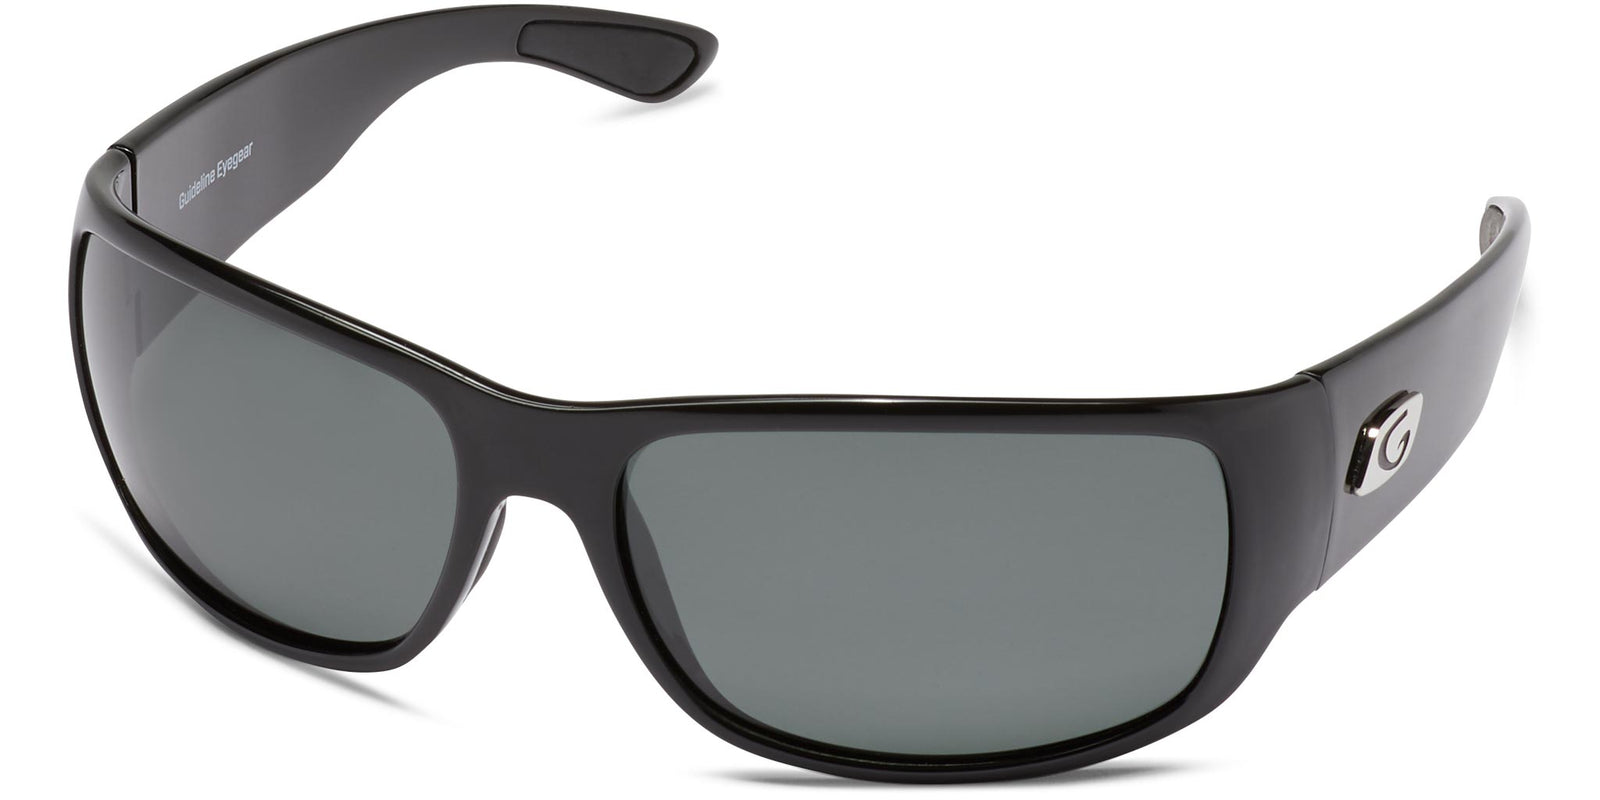 Guideline Eyegear - Del Mar Bifocal Polarized Sunglasses Guideline